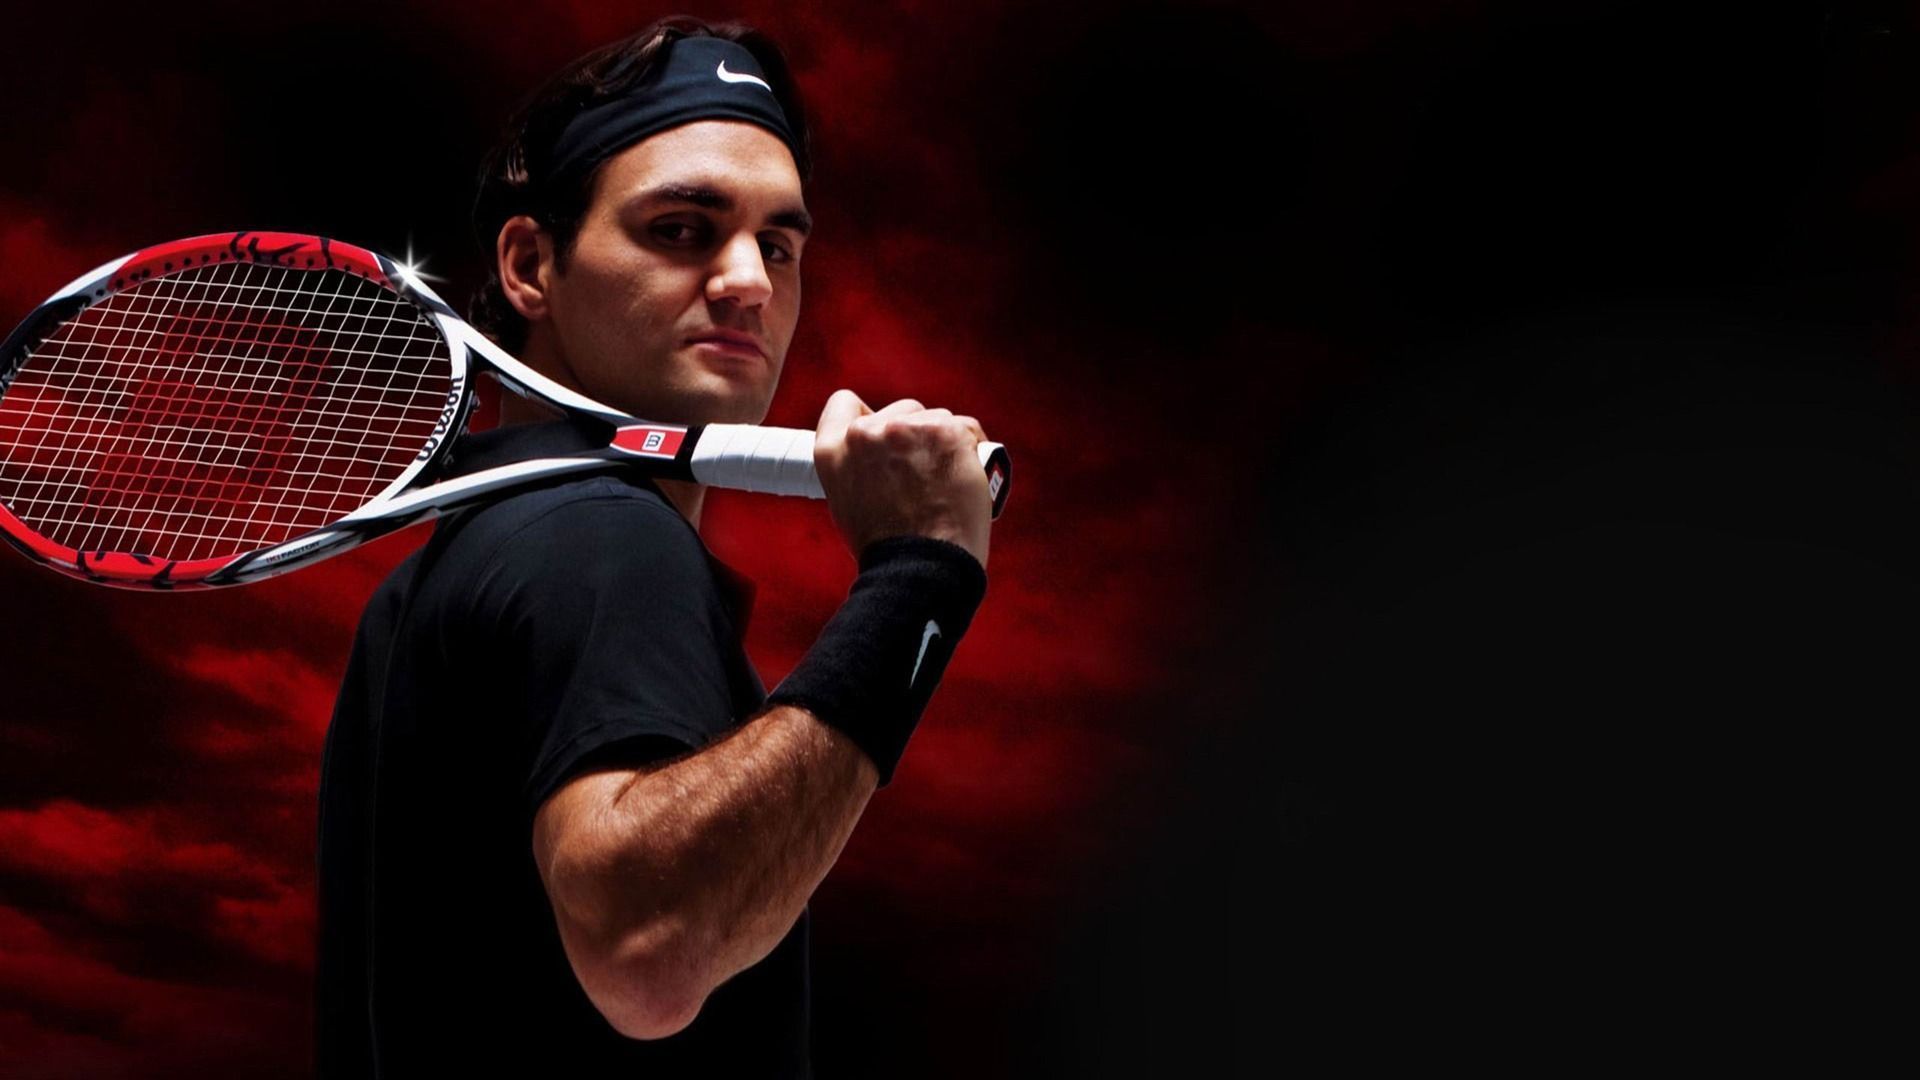 Roger Federer-Tennis Sport Desktop Wallpapers 03 - 1920x1080 ...